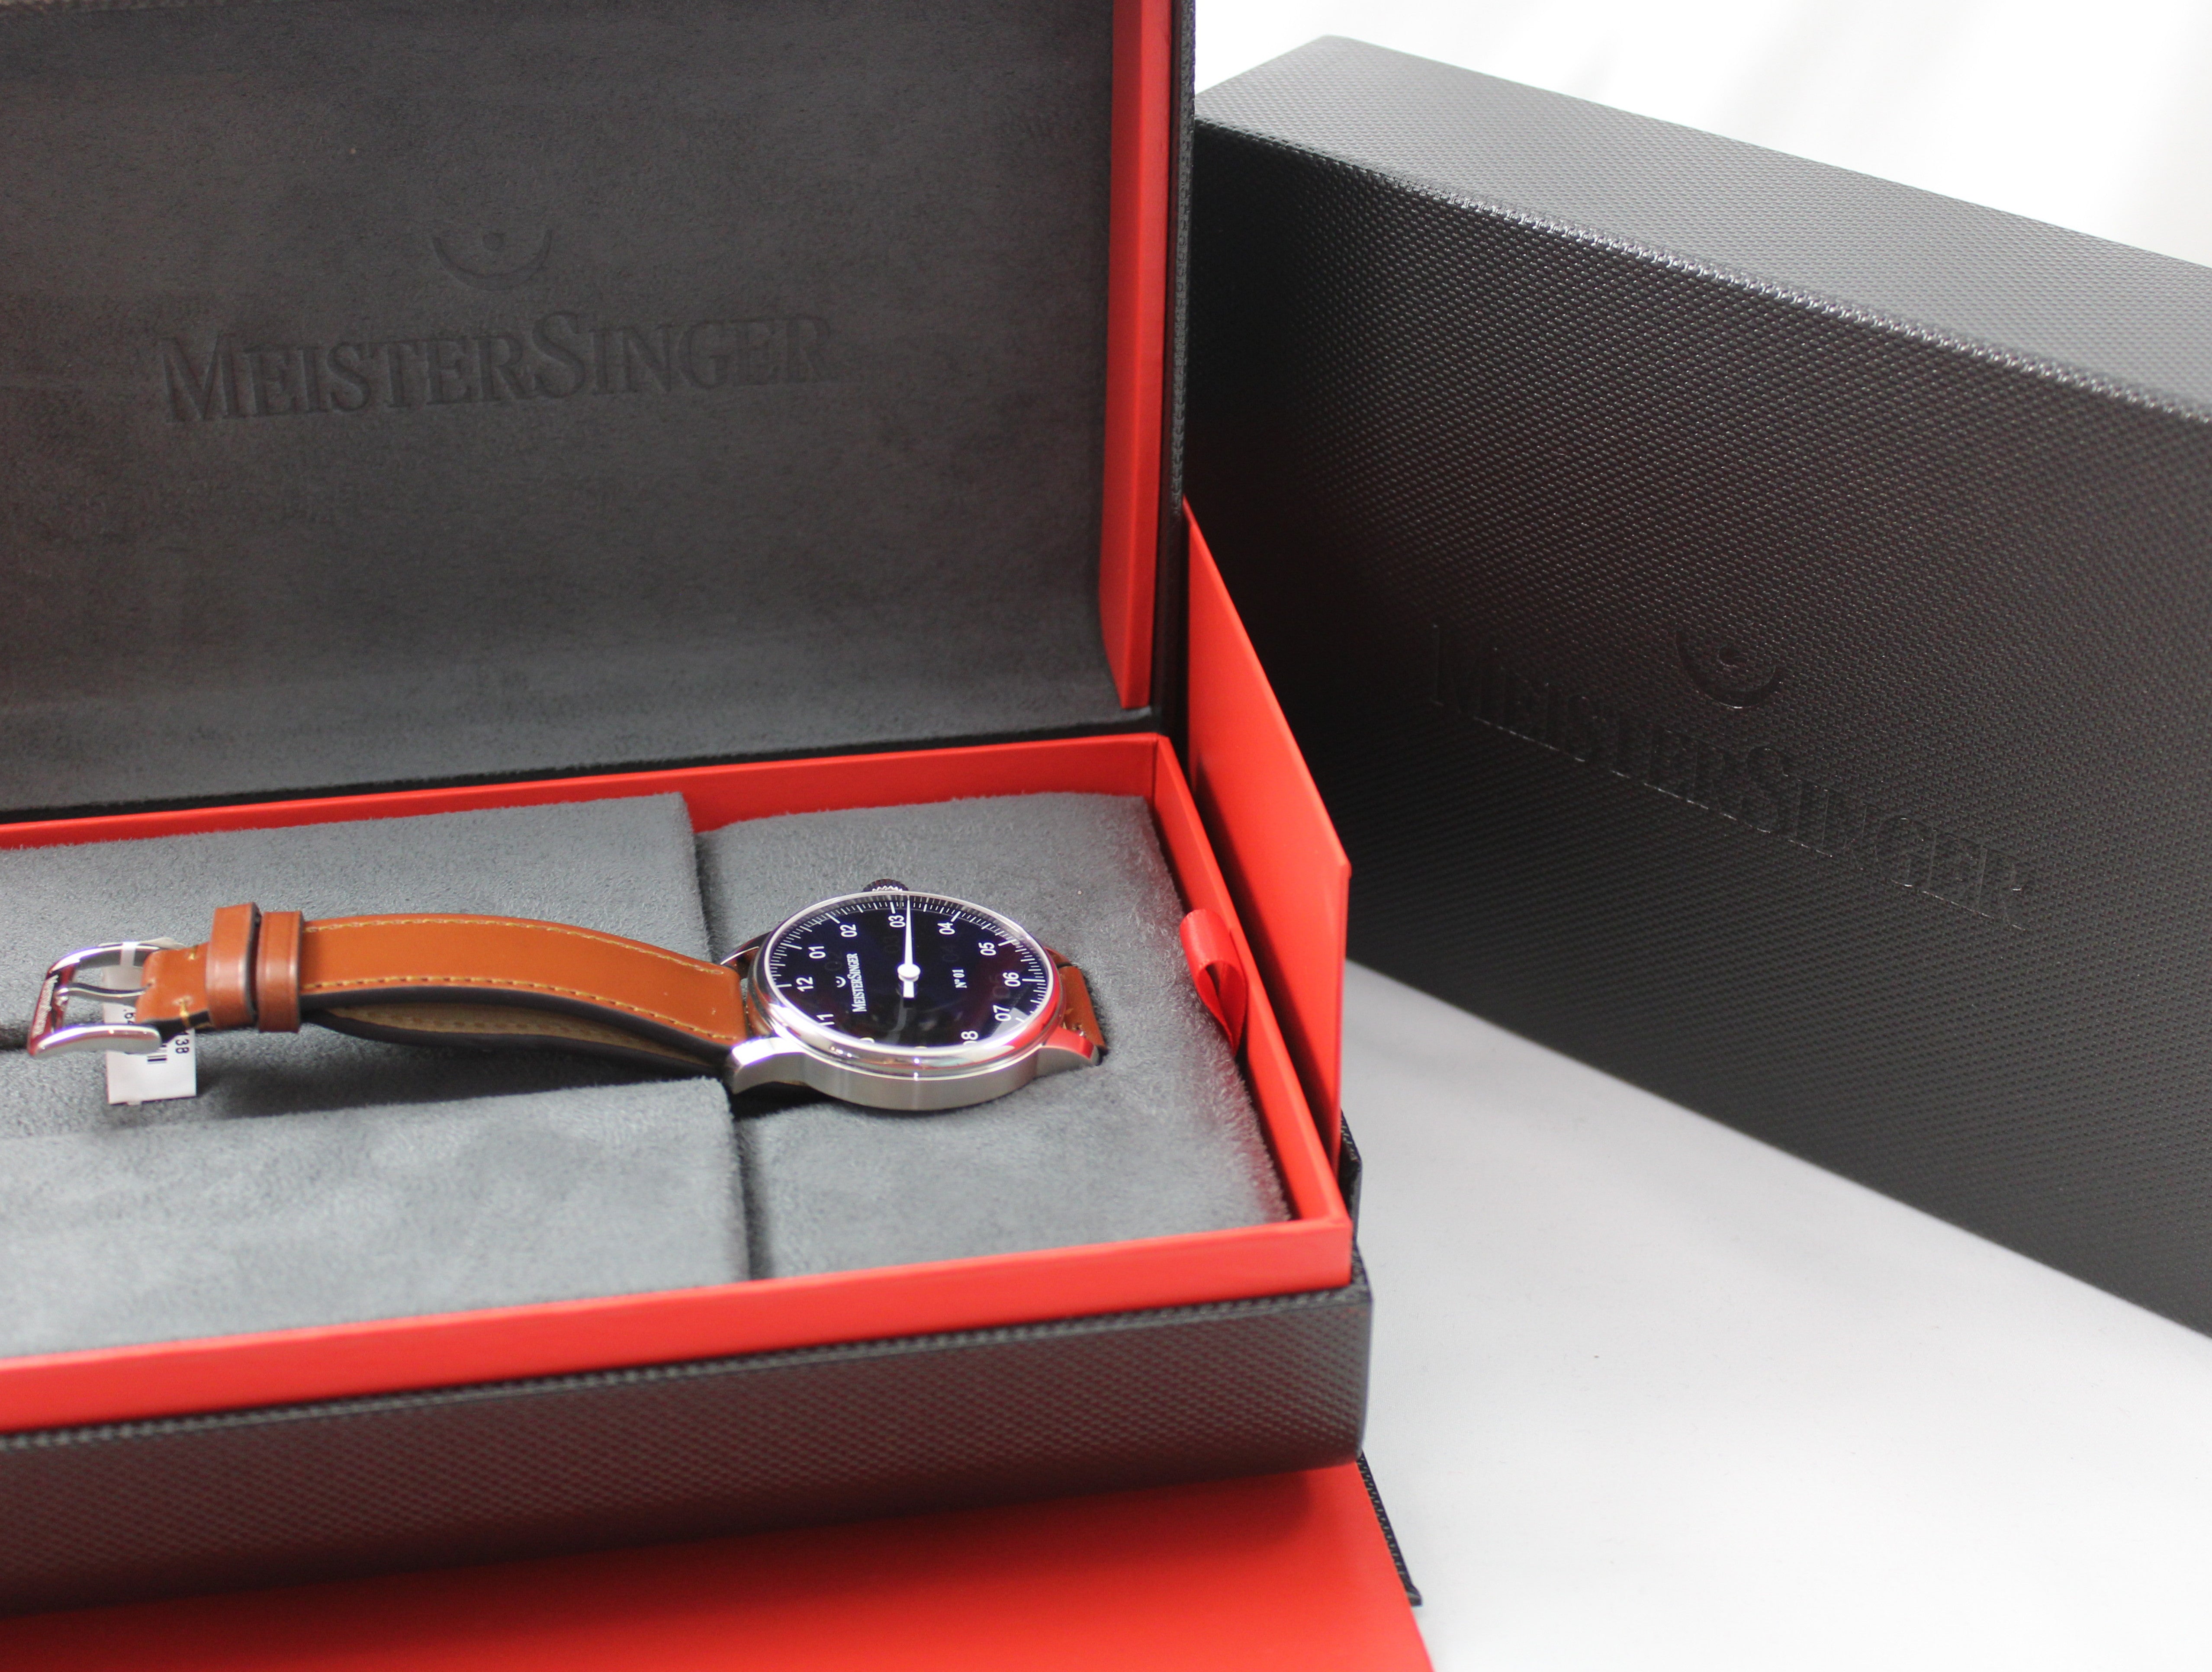 MeisterSinger No. 01 Single Hand Manual Wind Sunburst Blue Dial Stainless Watch